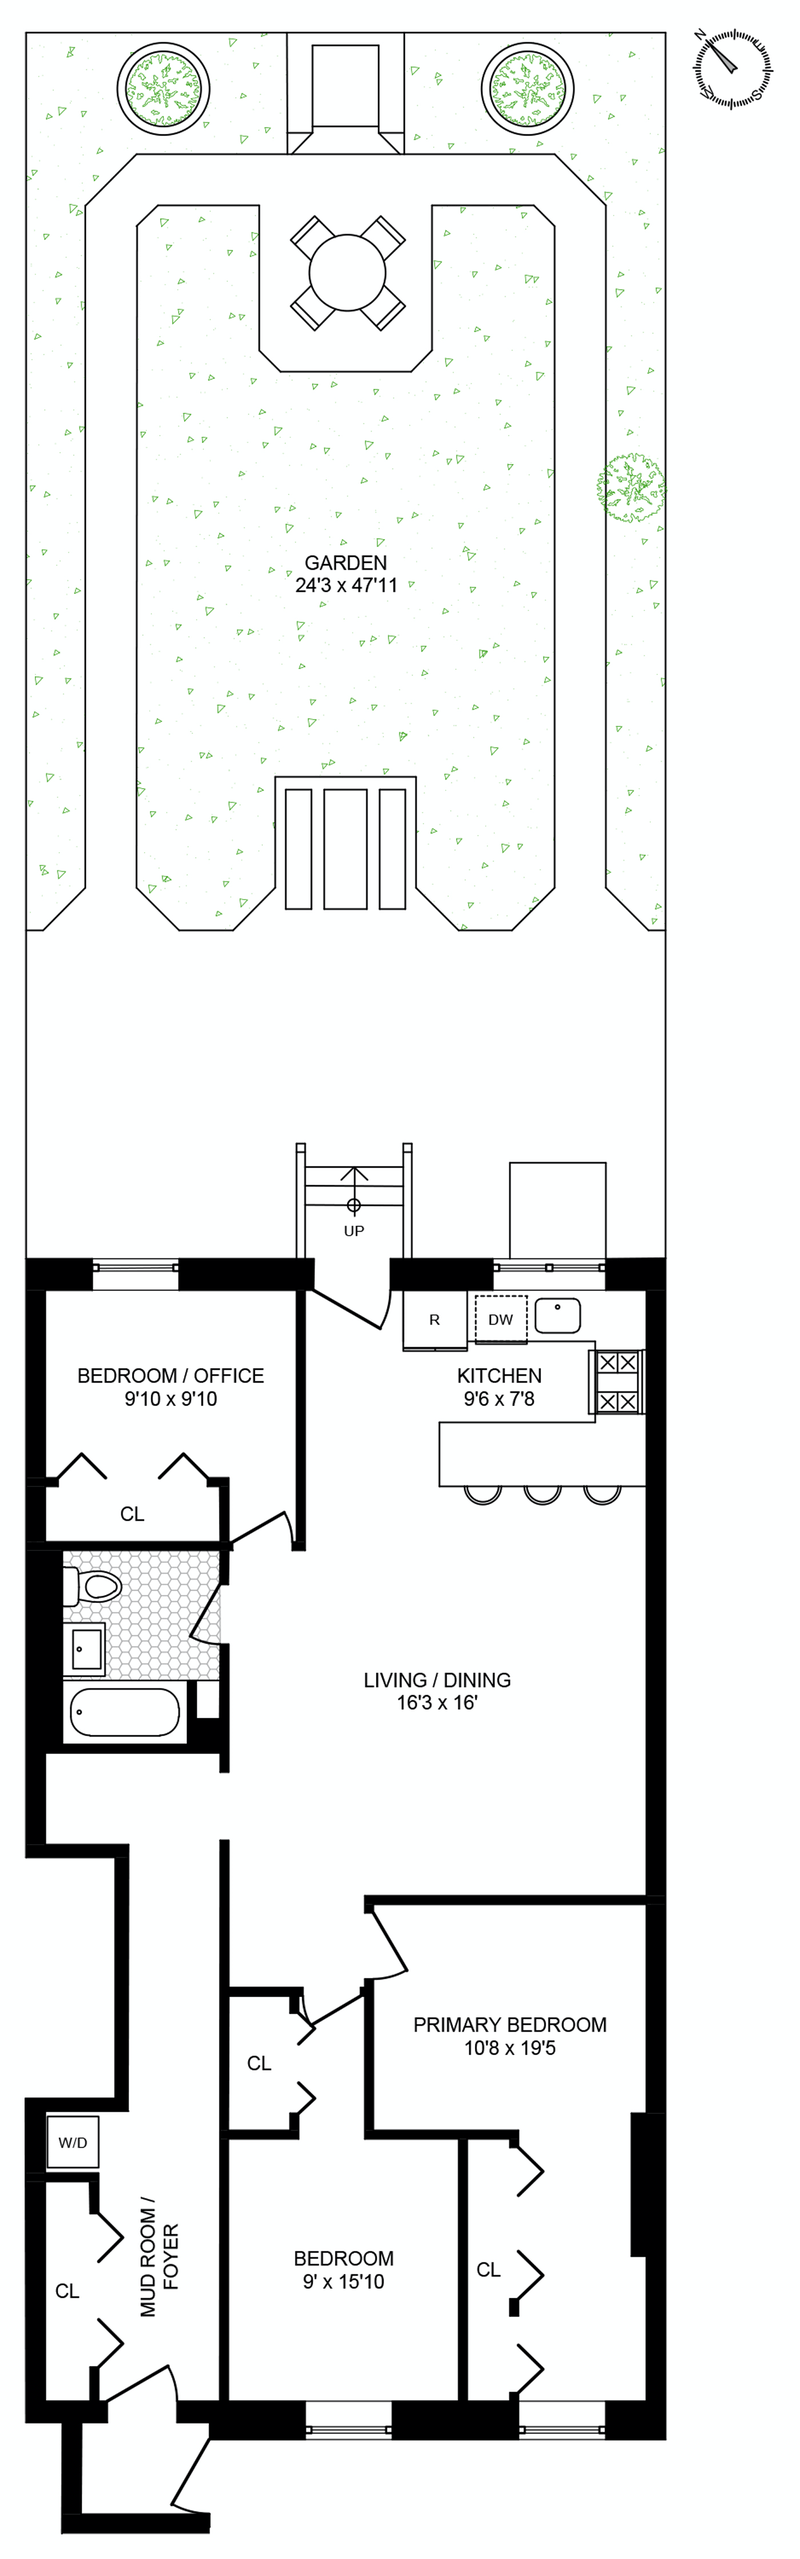 Floorplan for 189 Amity Street, 1